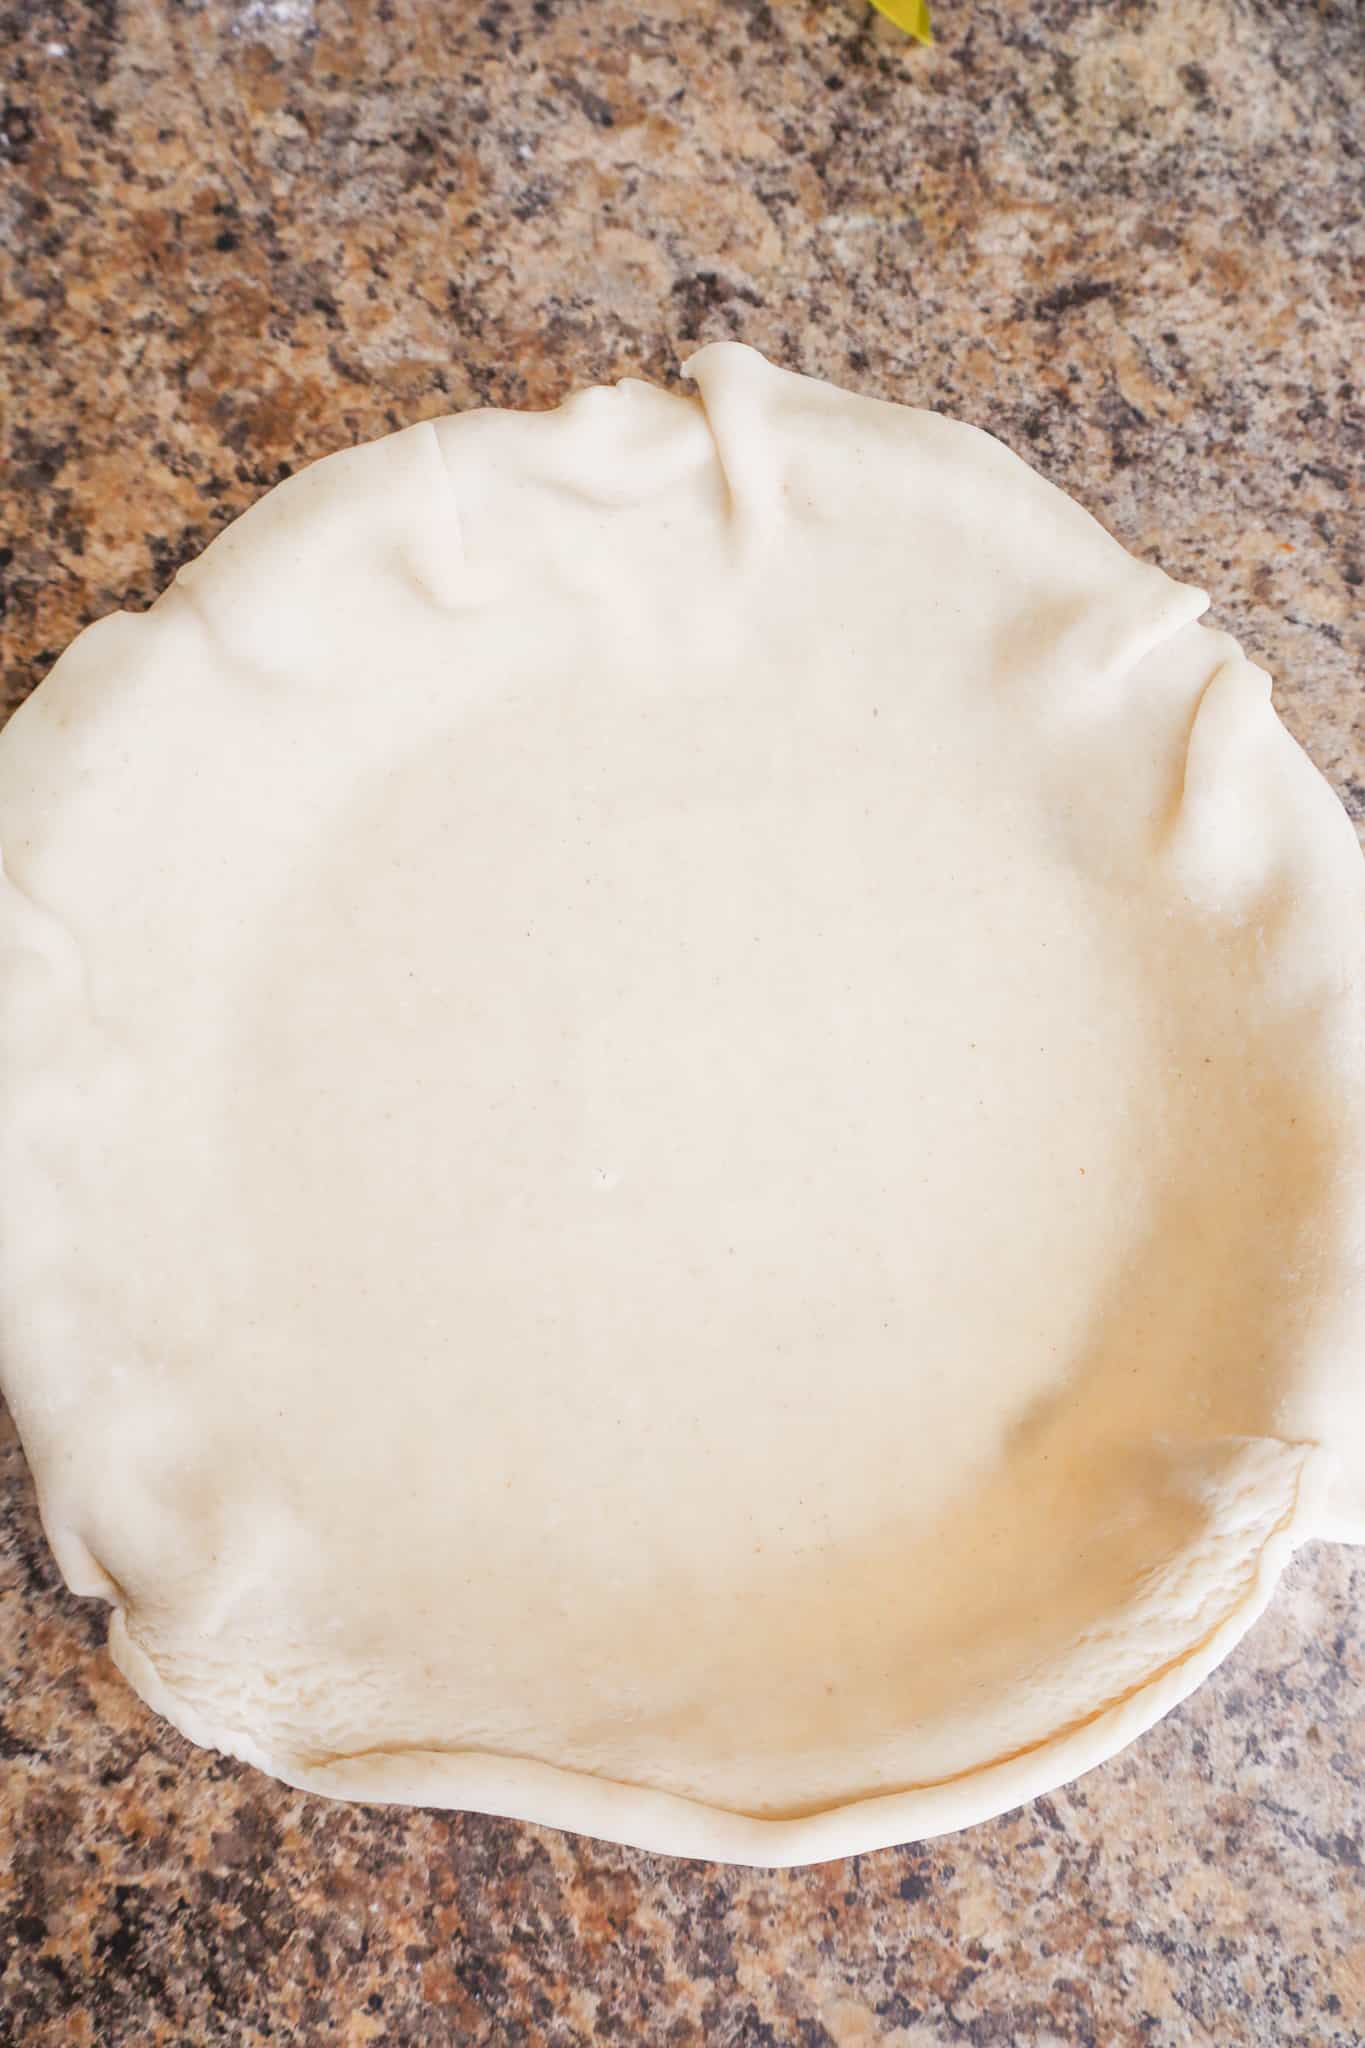 unbaked pie crust in a pie plate